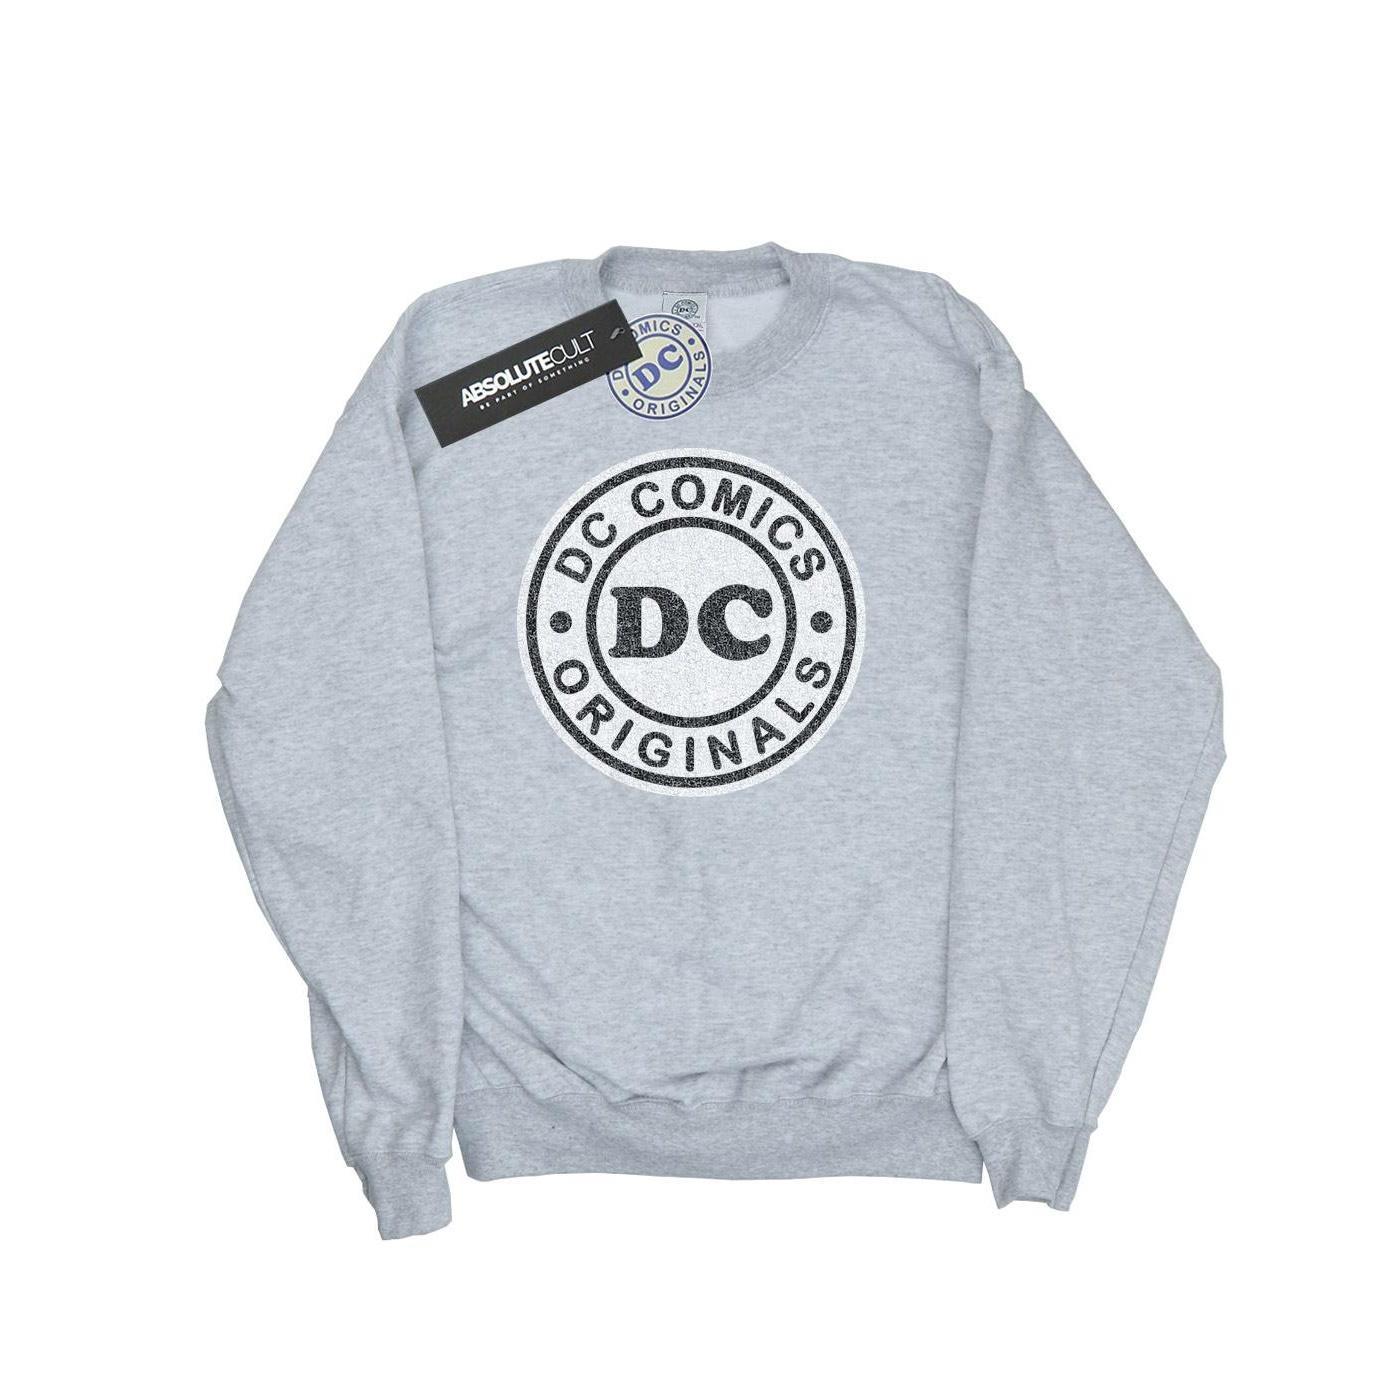 DC Comics Girls DC Originals Crackle Logo Sweatshirt (Sports Grey) (5-6 Years)